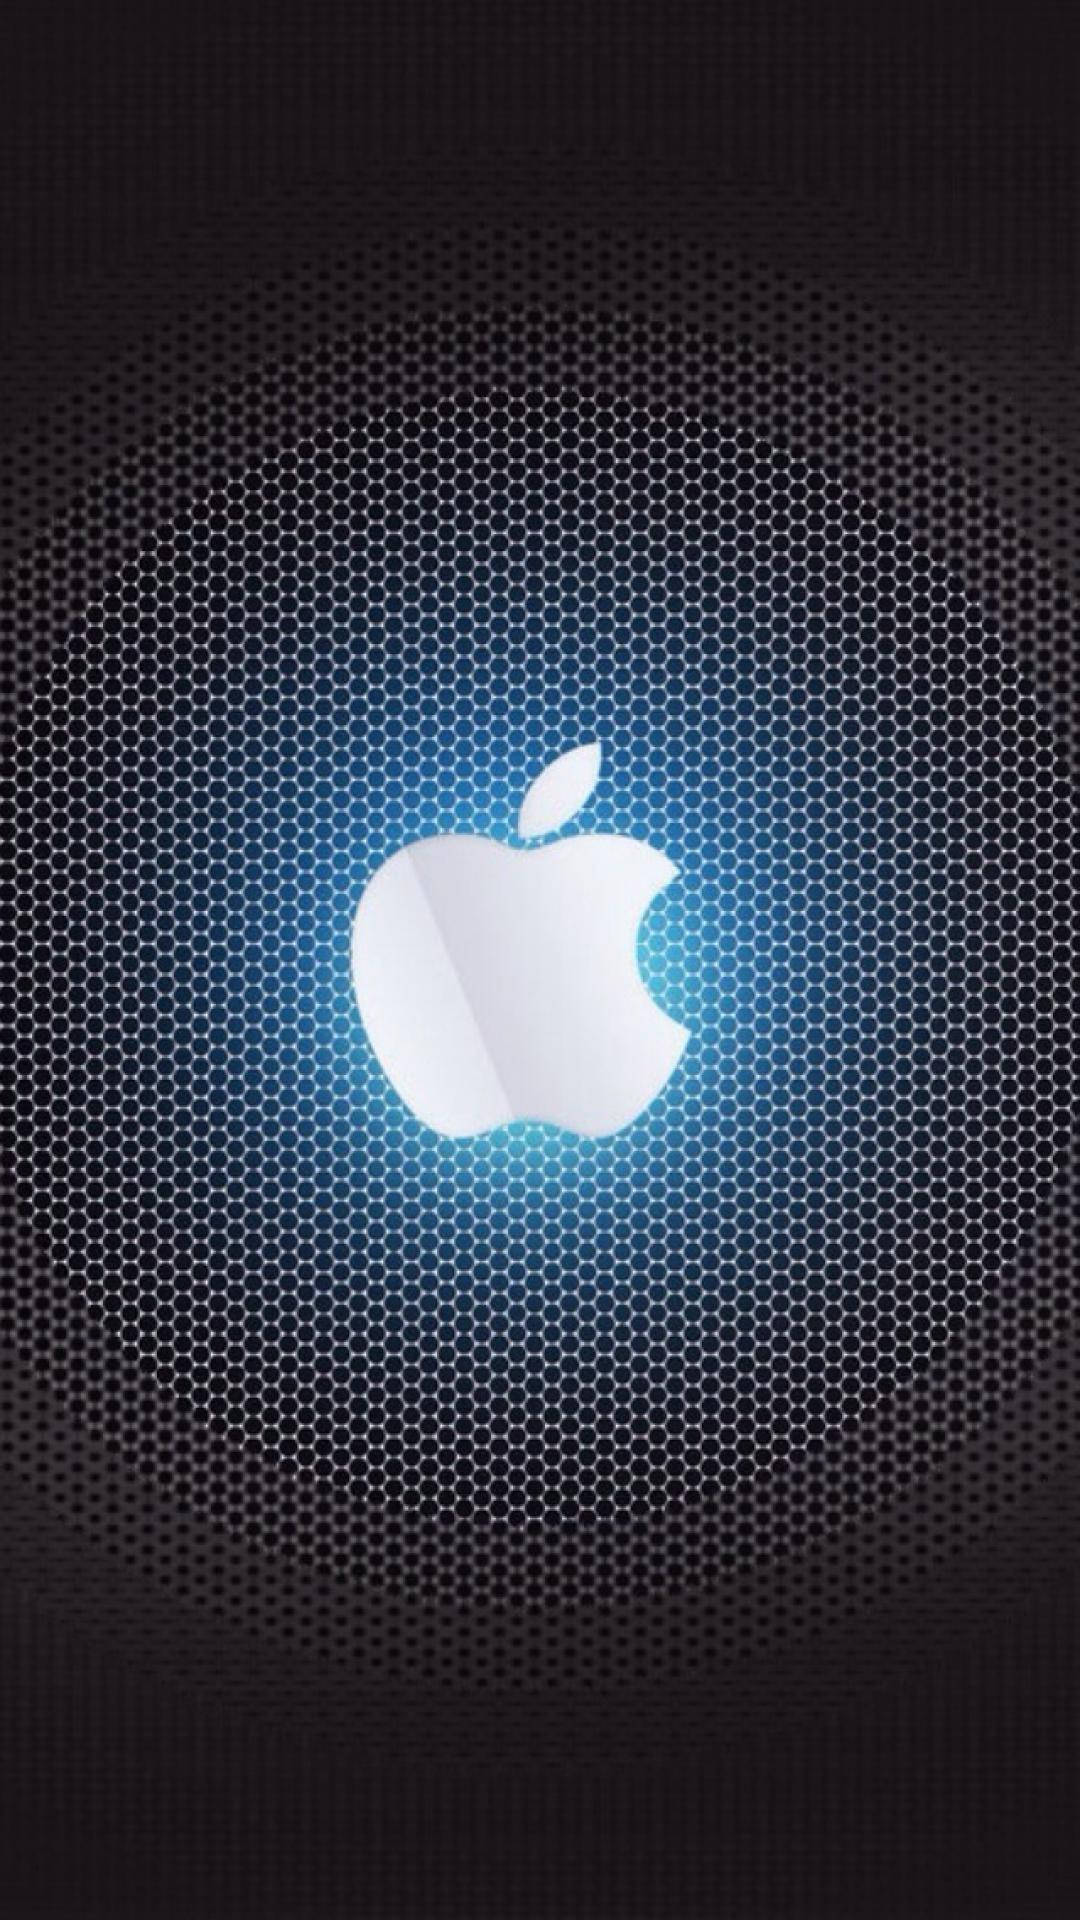 Apple Logo 4k In Digital Form Picture